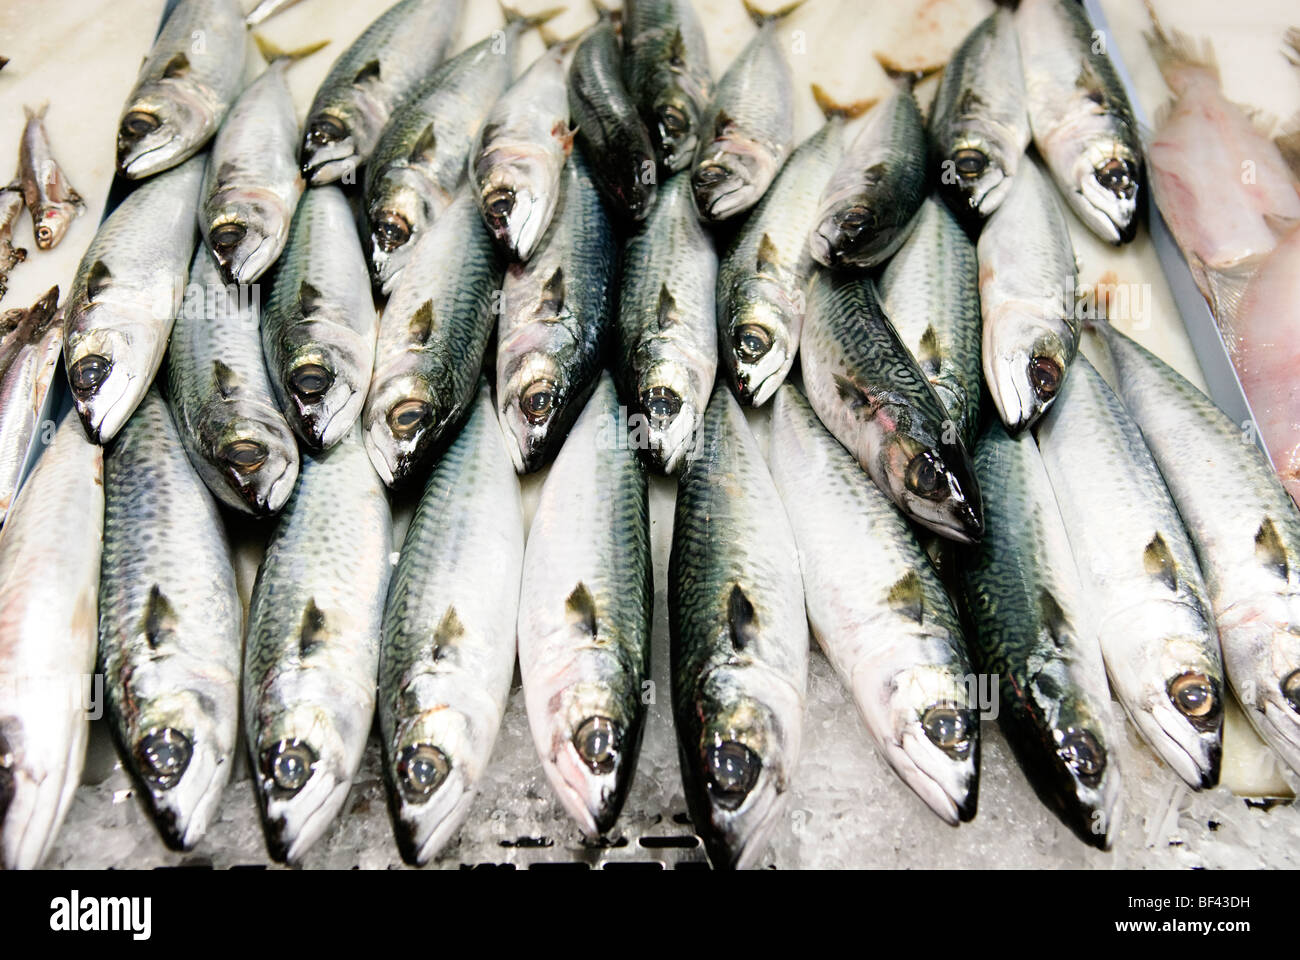 fresh mackerel on ice Stock Photo